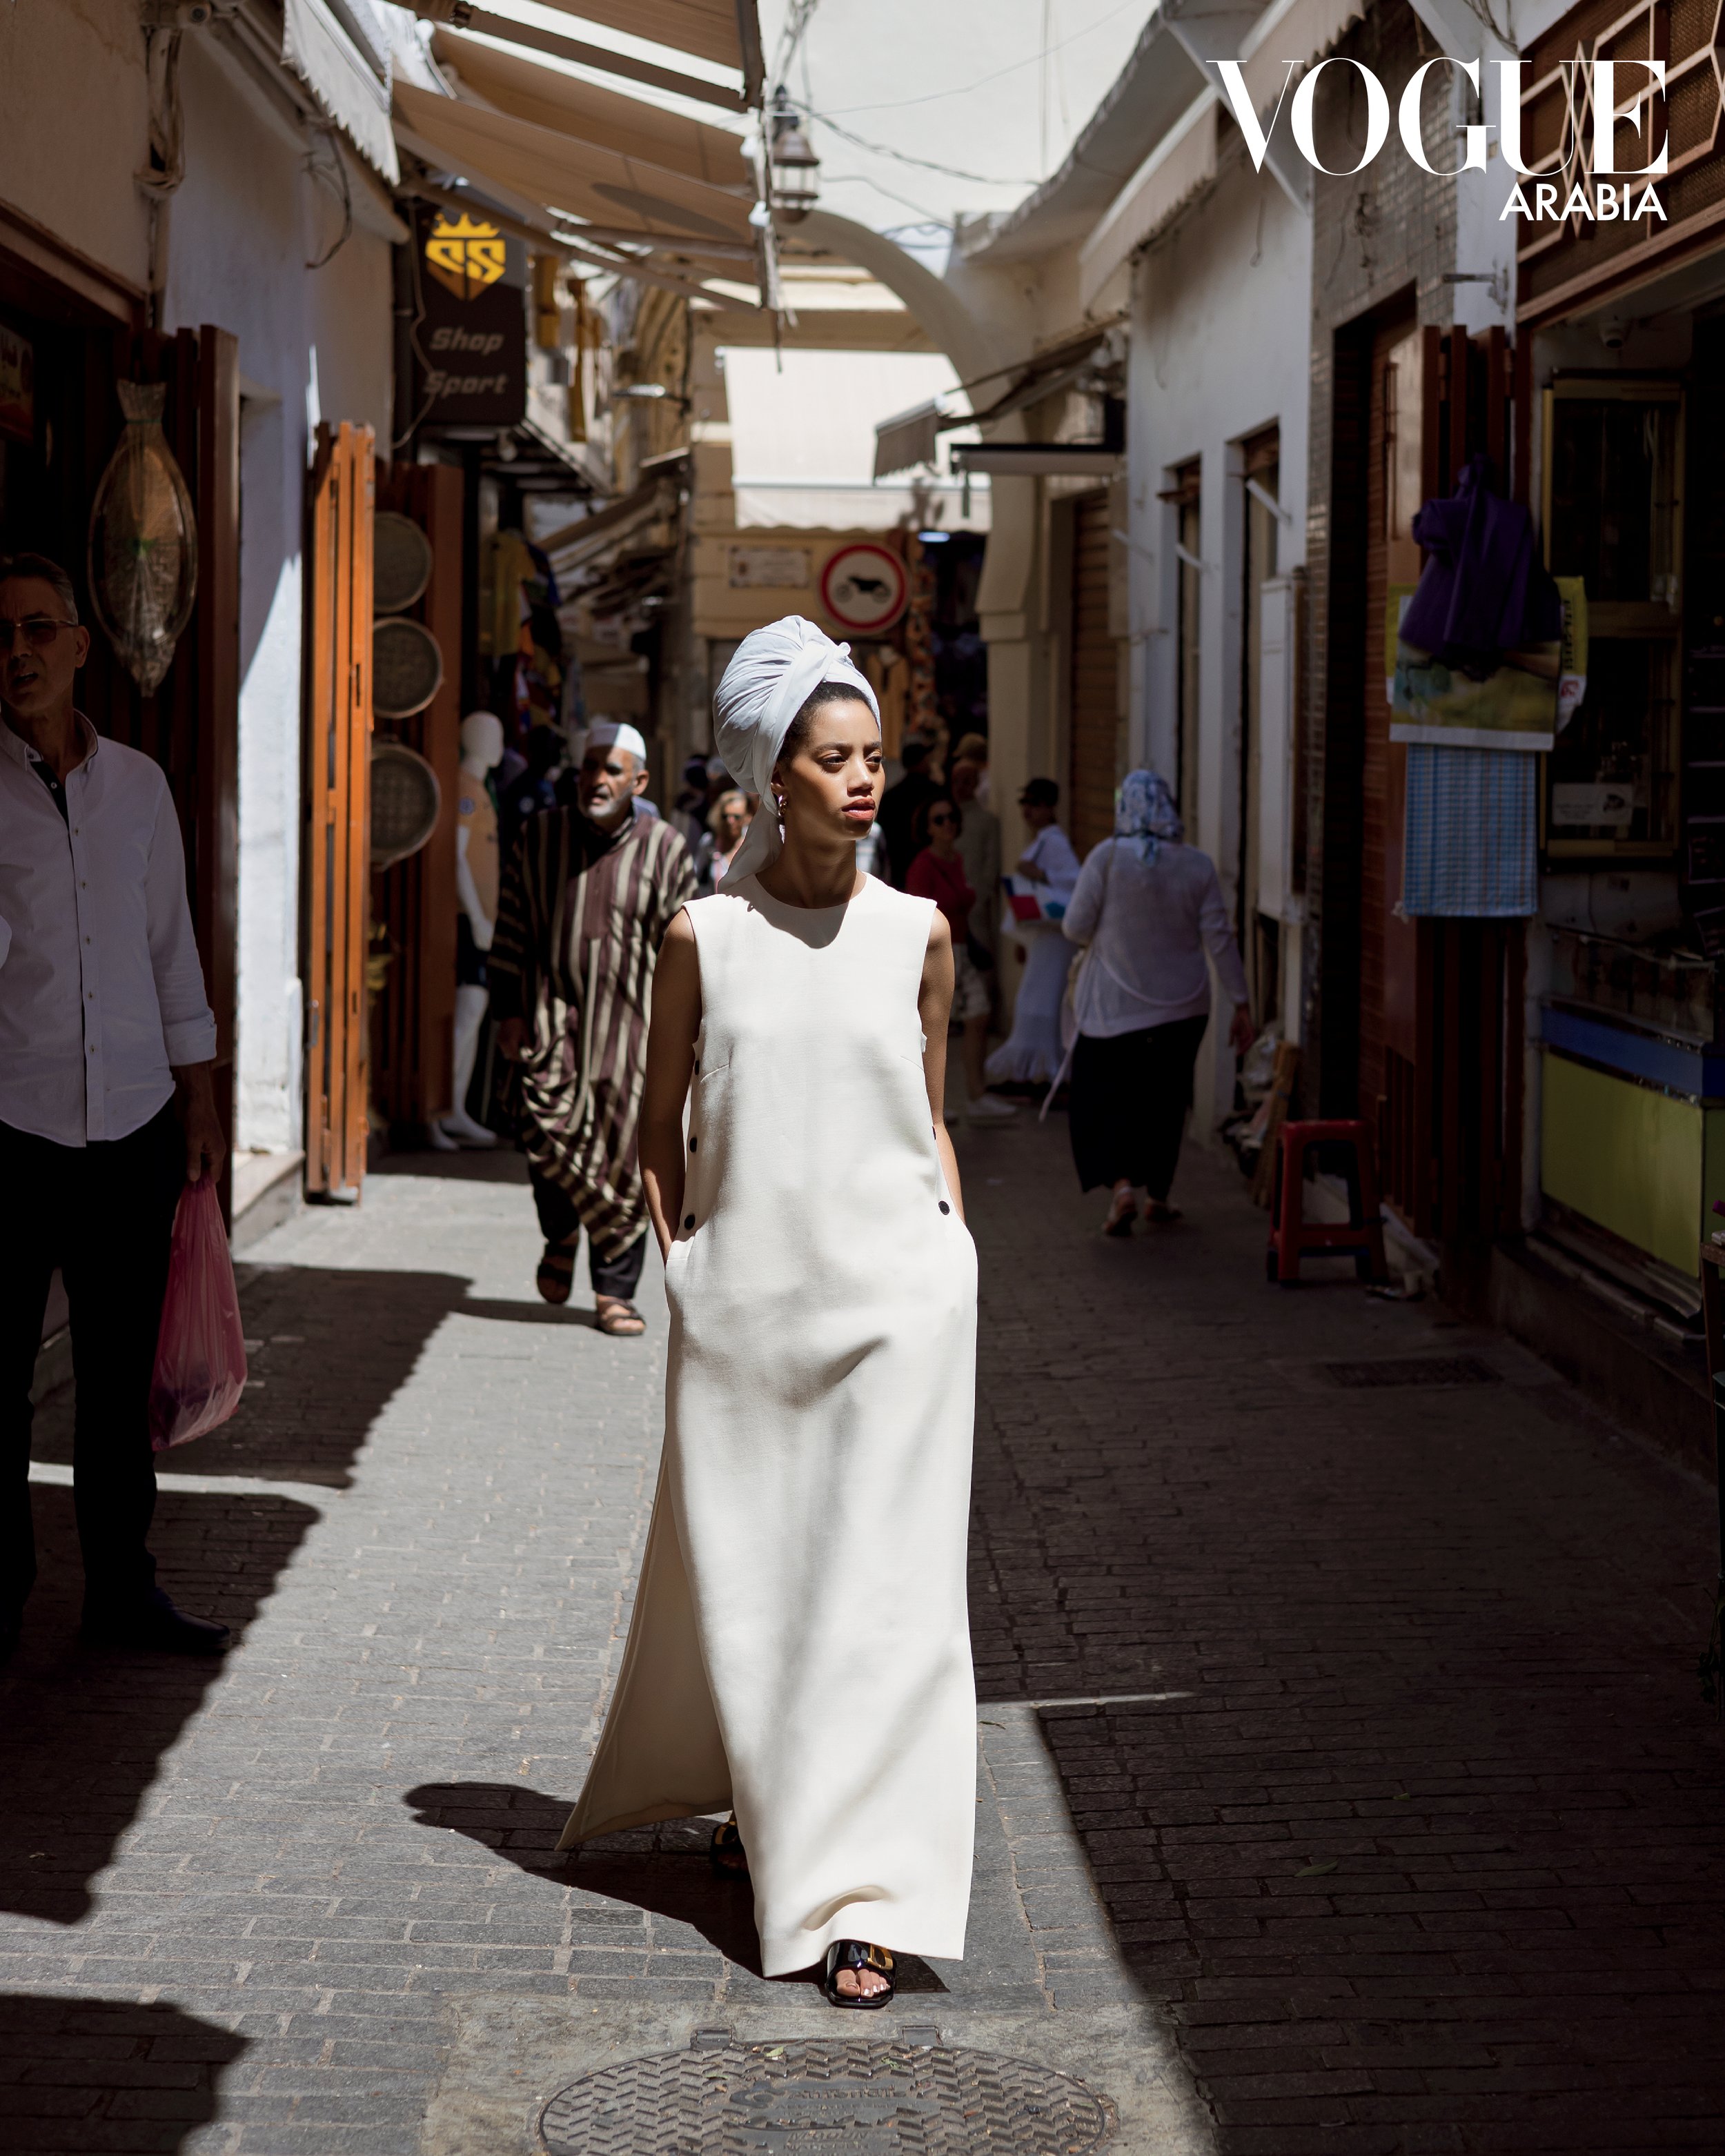 ARABIC_Fashion Tangier_1080x1350_4.jpg